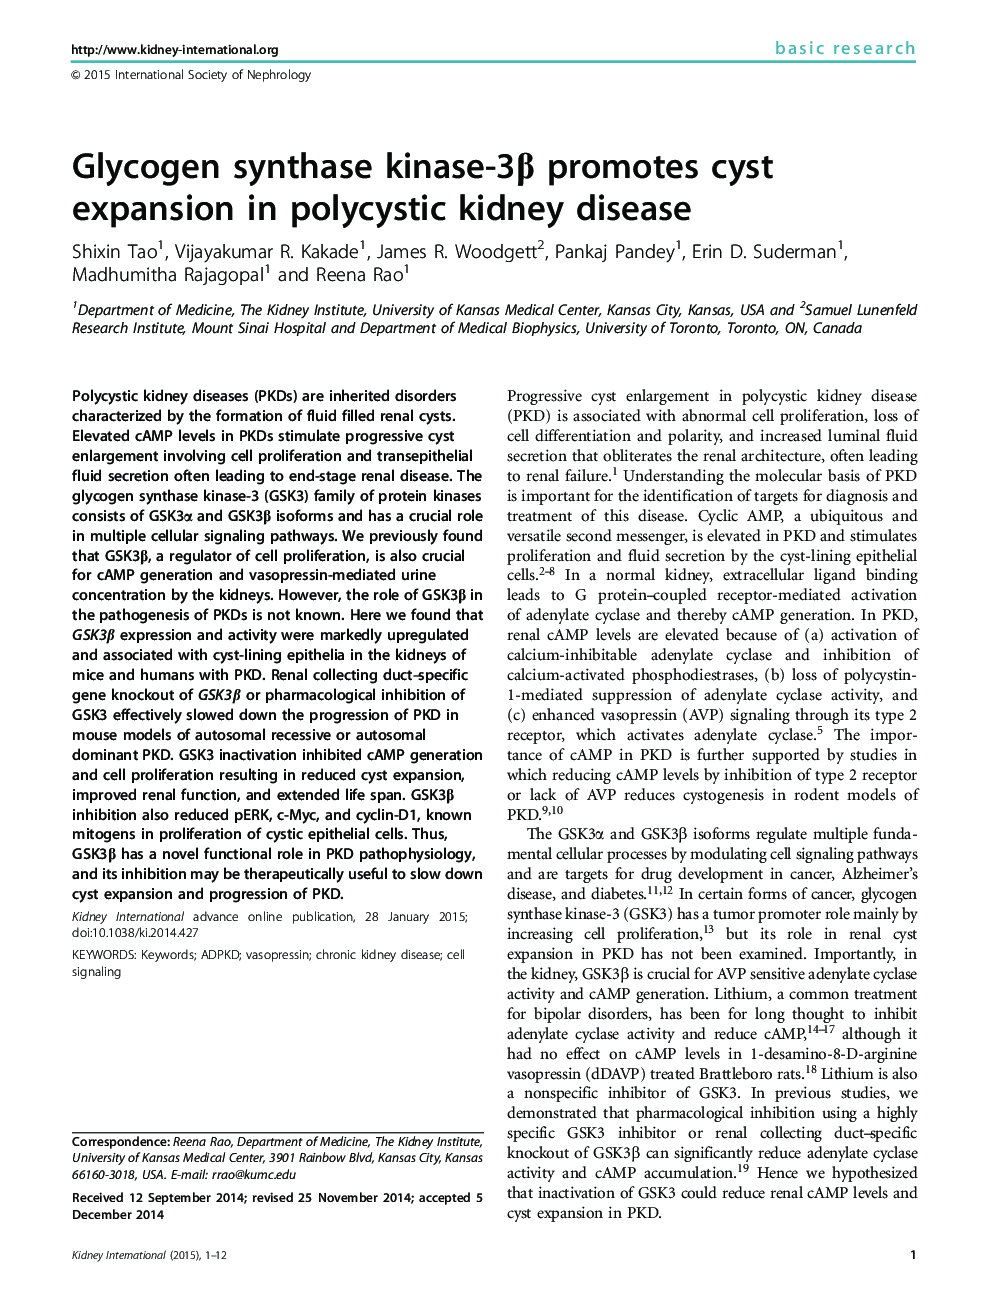 Glycogen synthase kinase-3Î² promotes cyst expansion in polycystic kidney disease